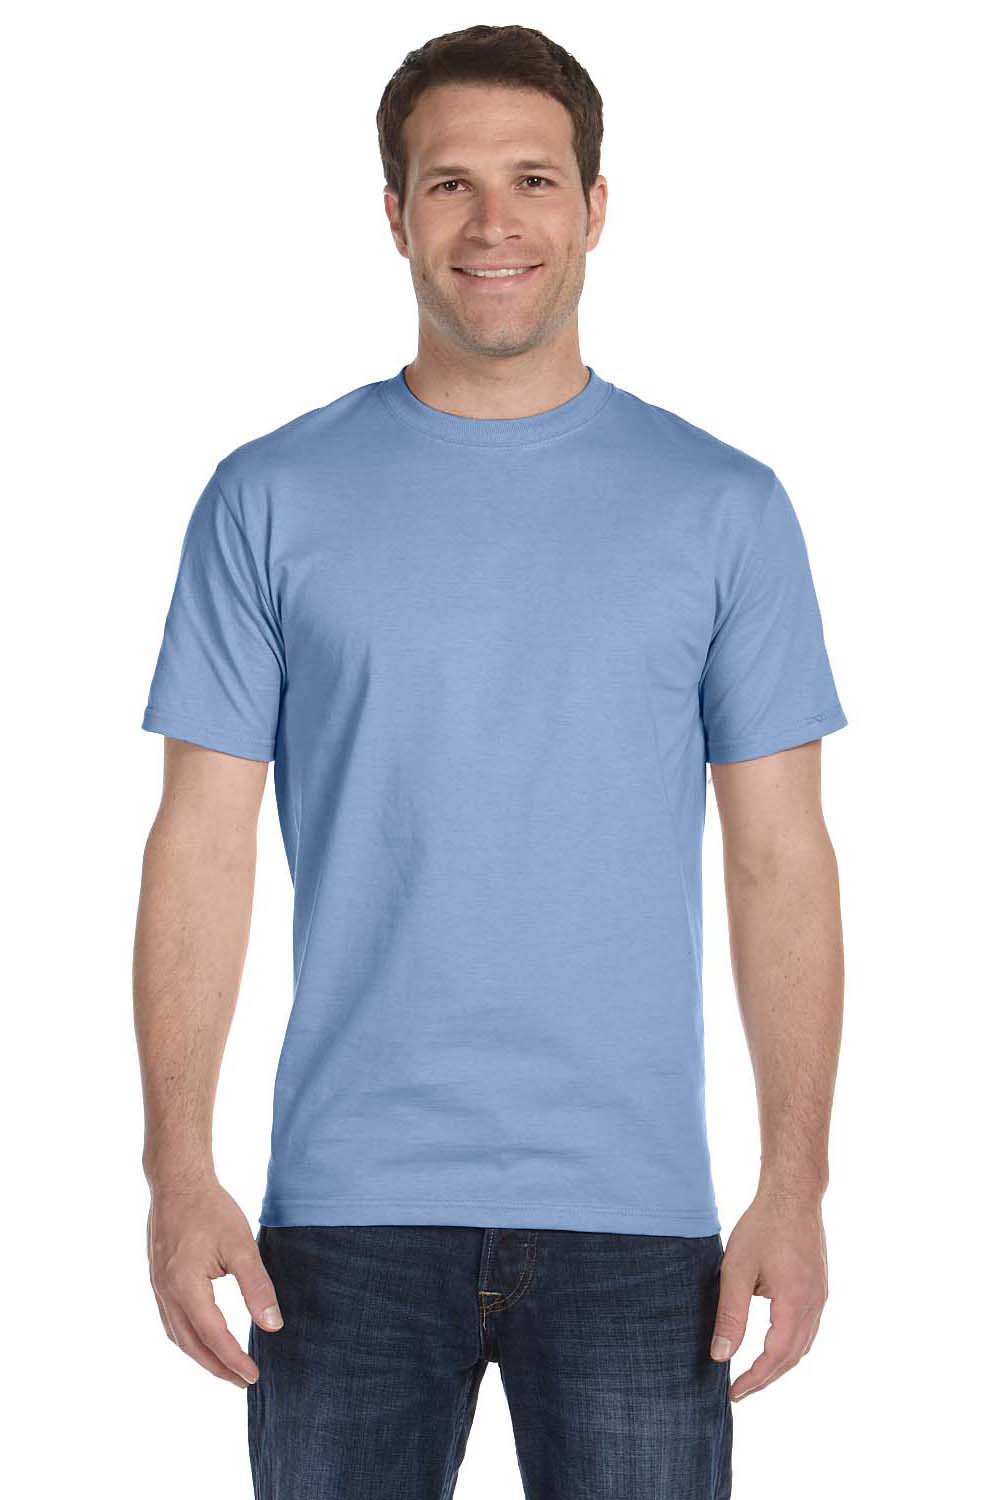 Hanes 5280 Mens ComfortSoft Short Sleeve Crewneck T-Shirt Light Blue Front